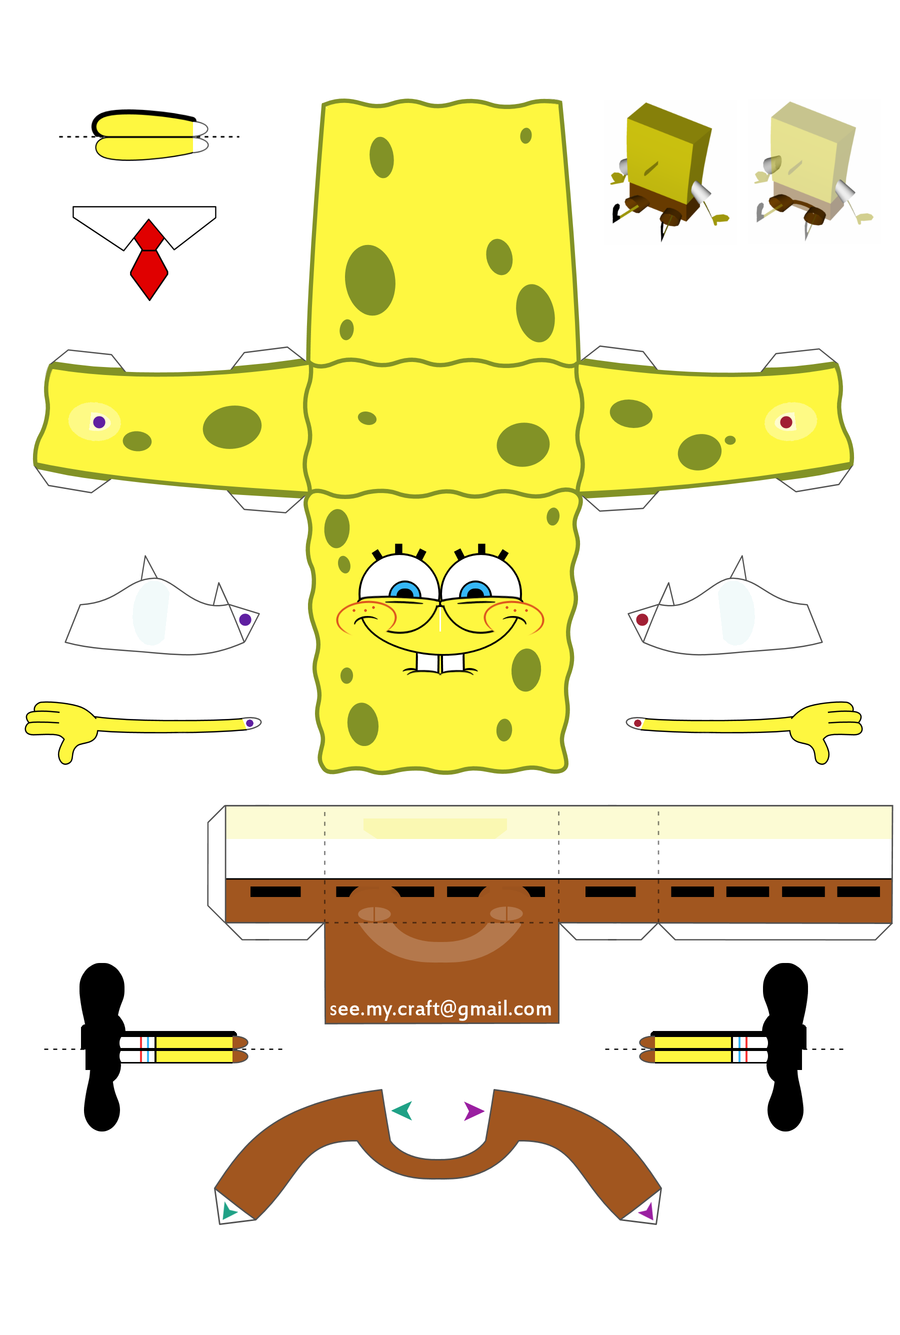 Spongebob Papercraft   Instructions by kamibox on